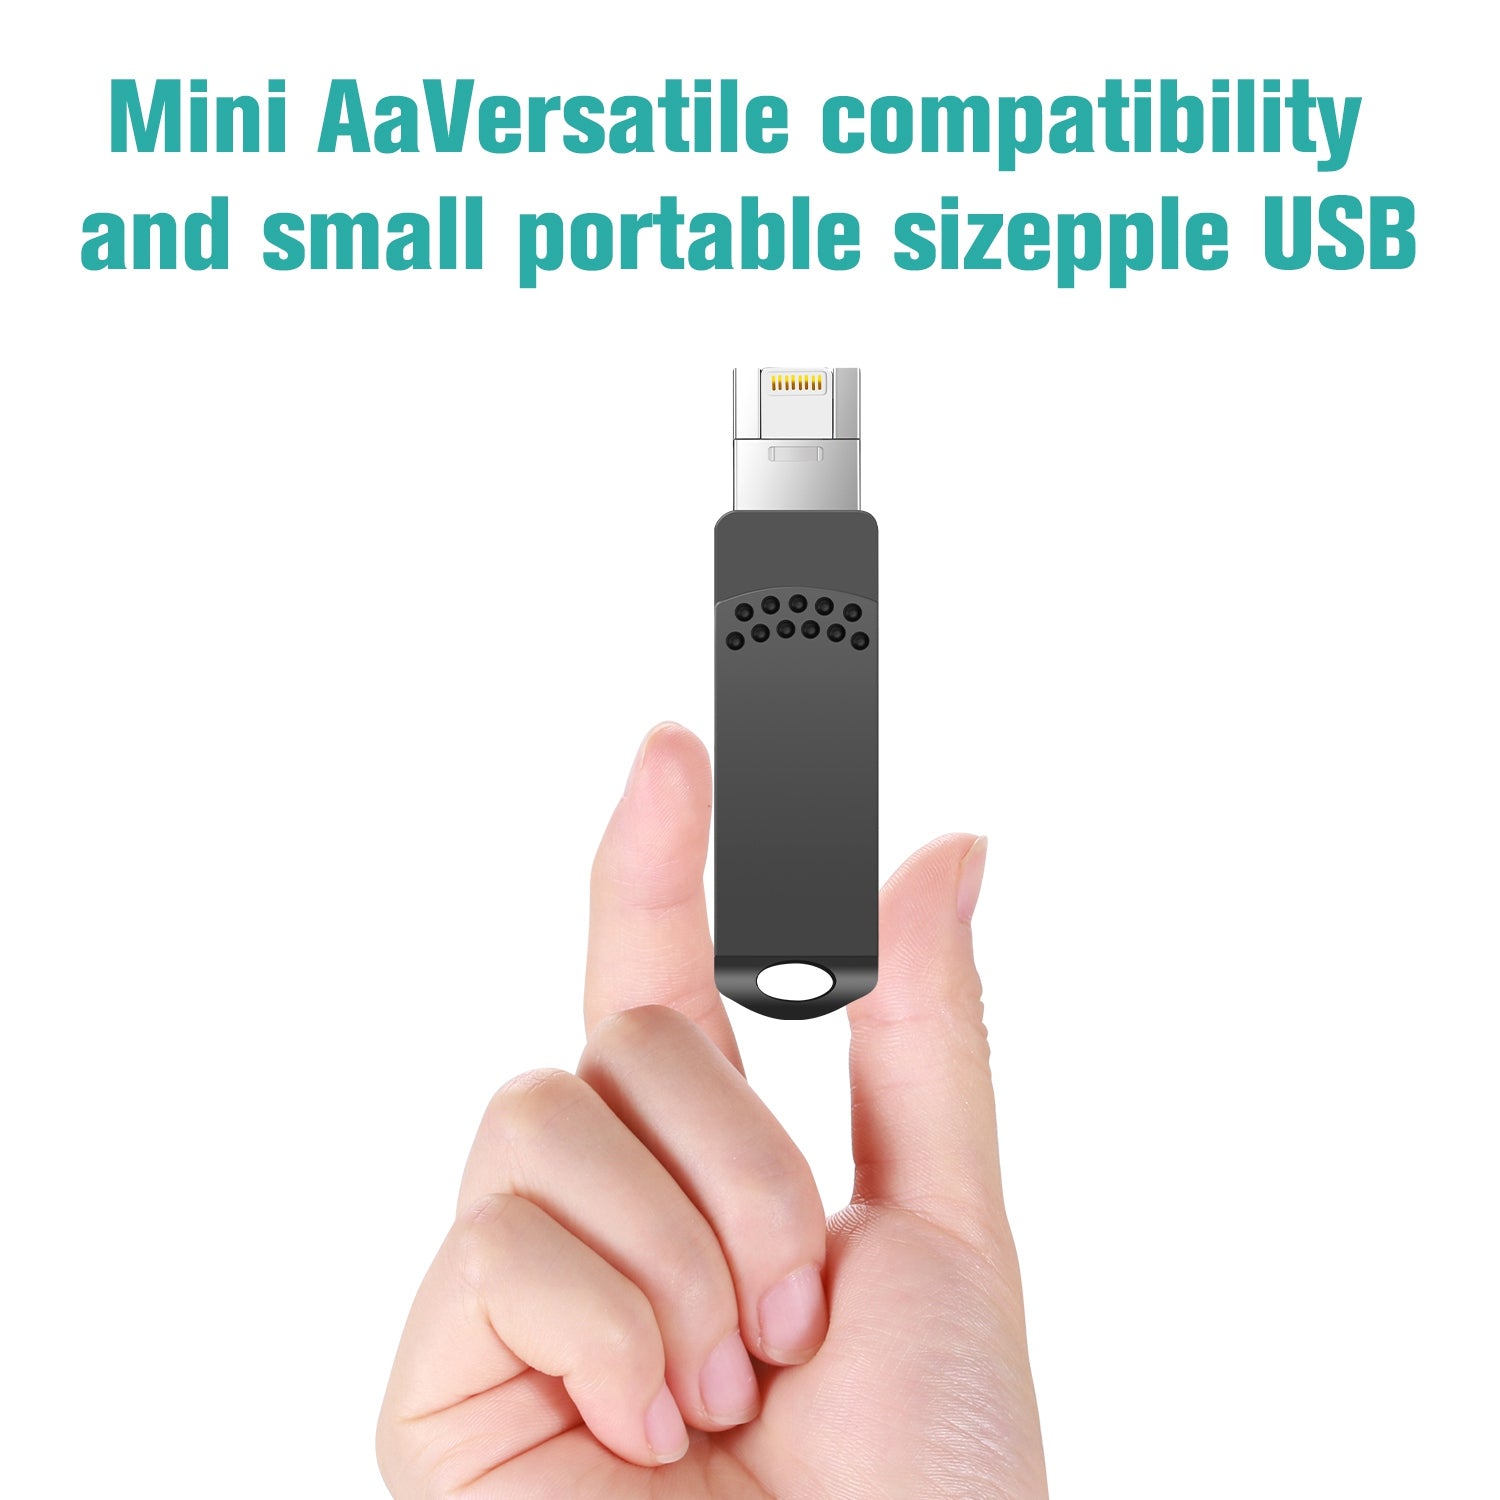 RICHWELL 256GB Swivel Memory Stick, Type C/Lightning/USB 3 in 1 Thumb Drive USB 3.0 Flash Drive - Pink